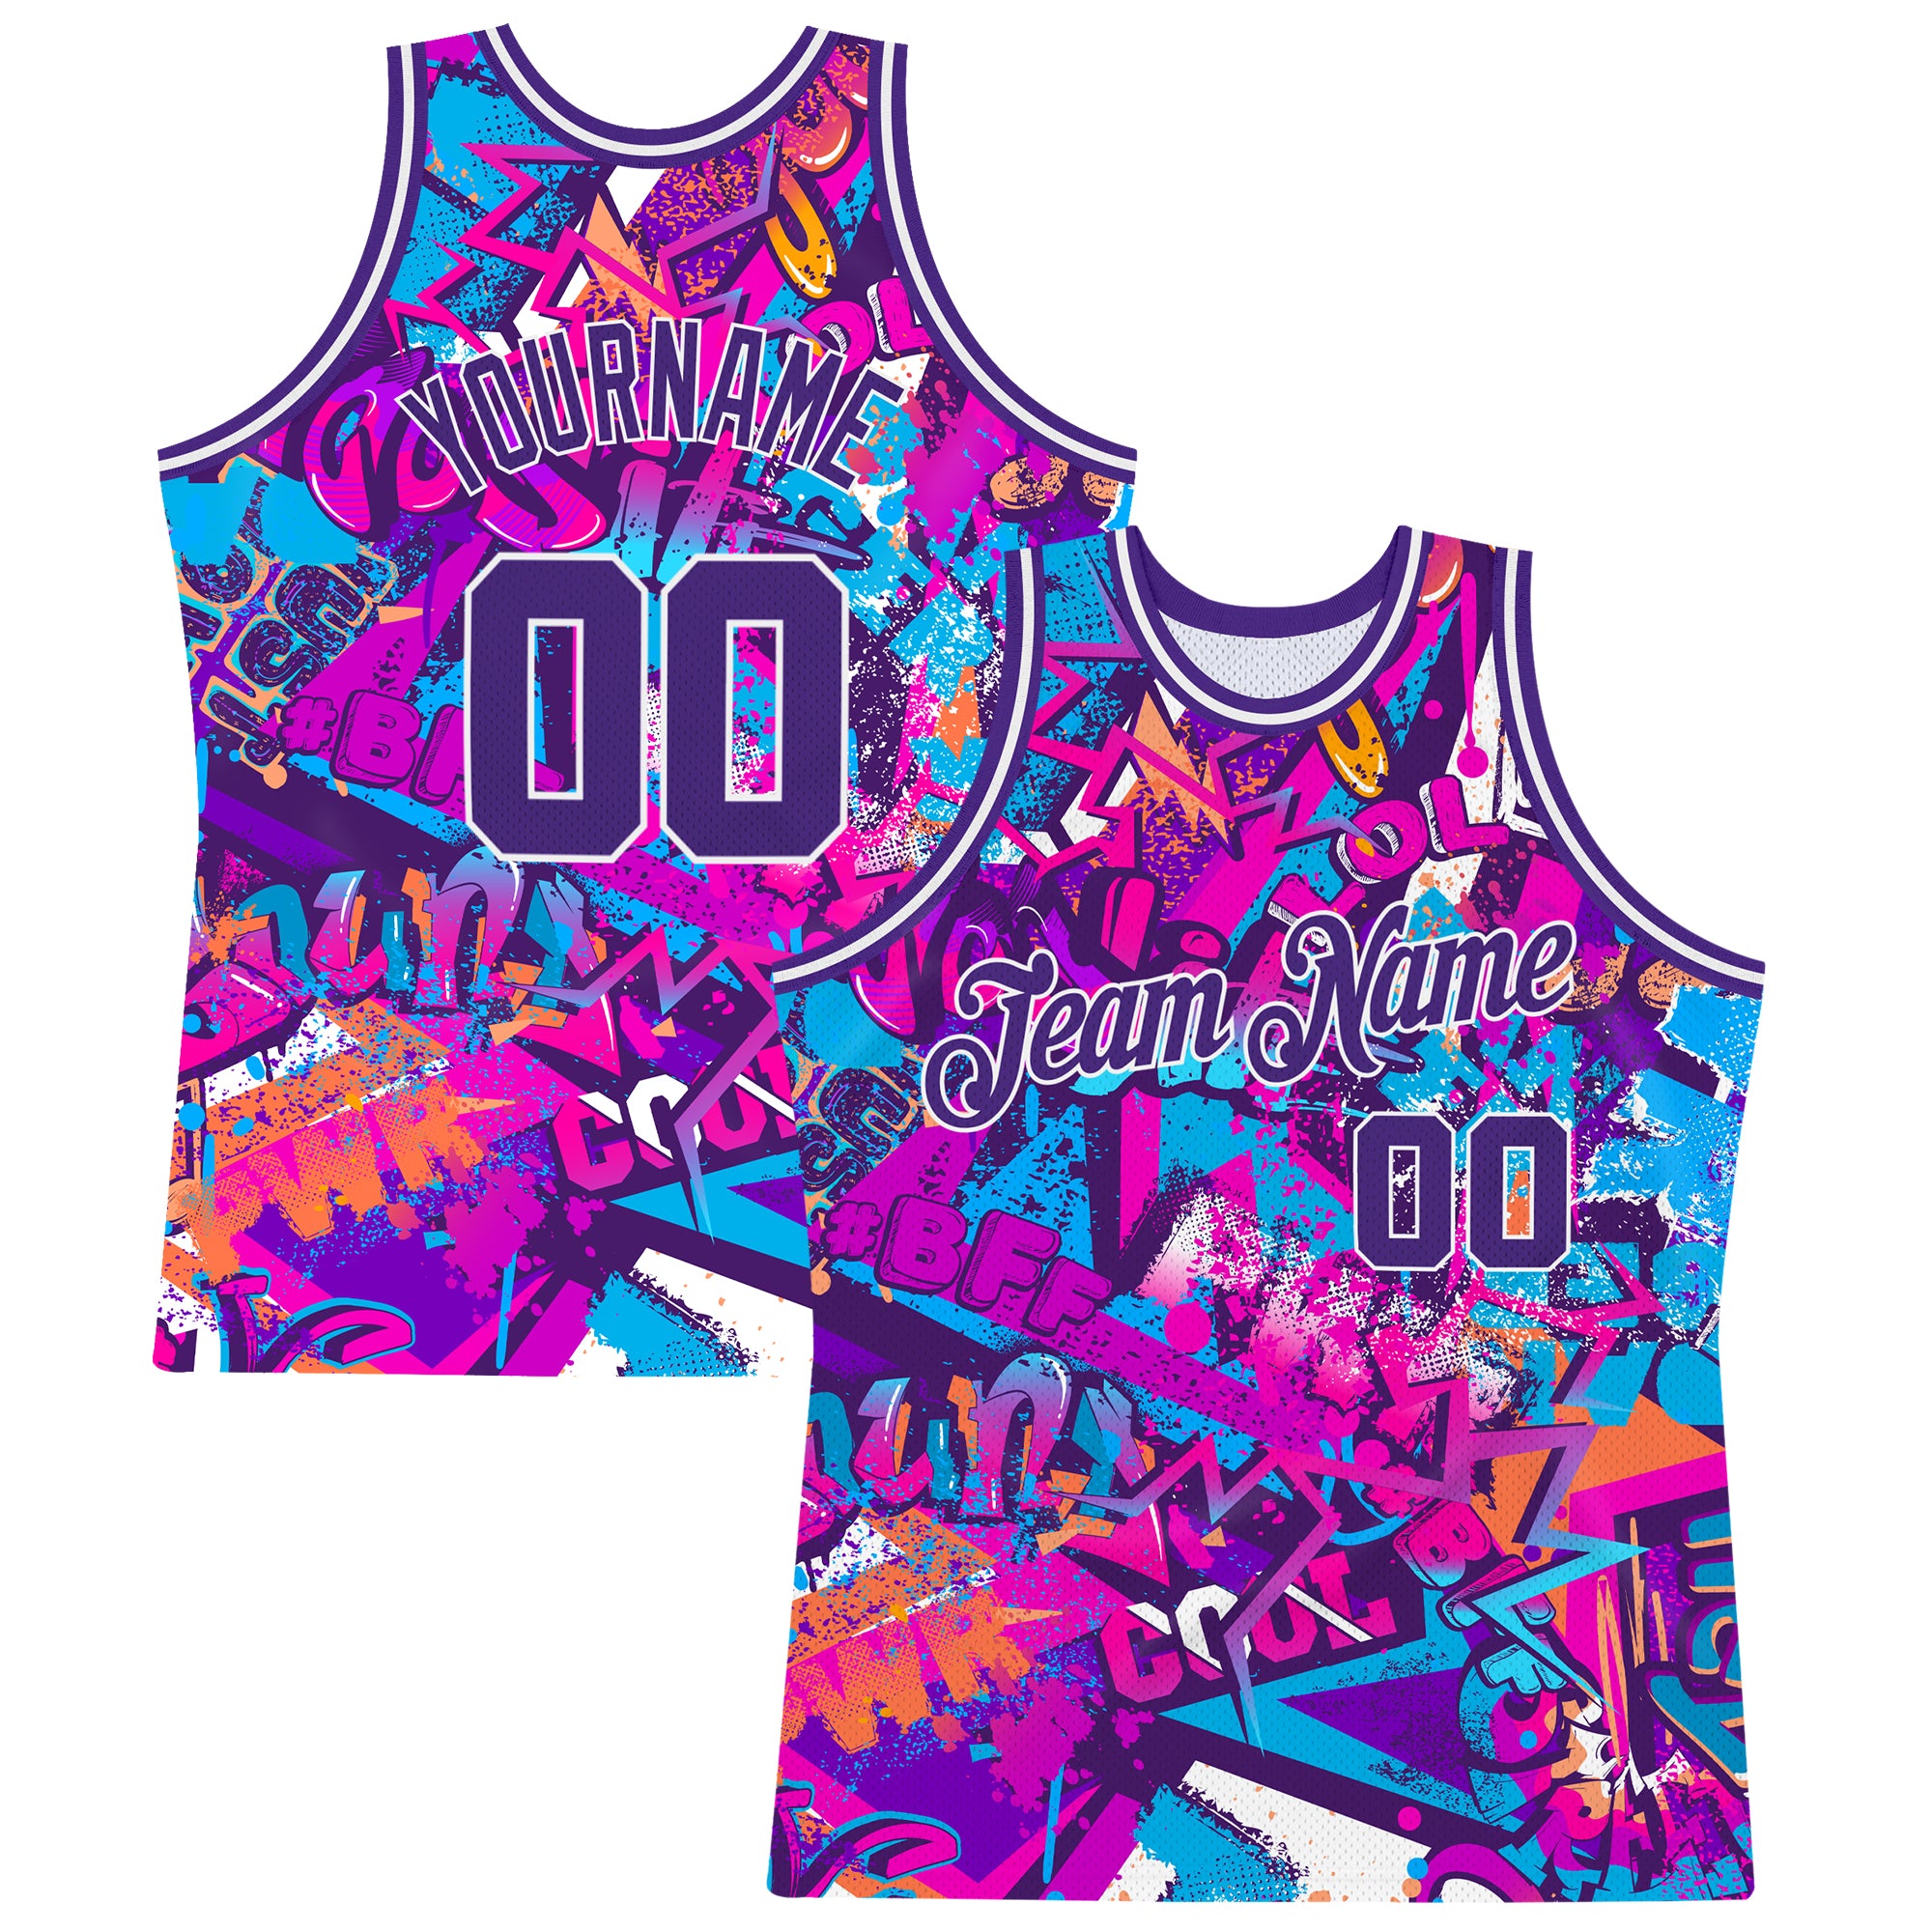 Sprinklecart Unisex New Custom Design Basketball Jersey - Multi Color Dot  Pattern